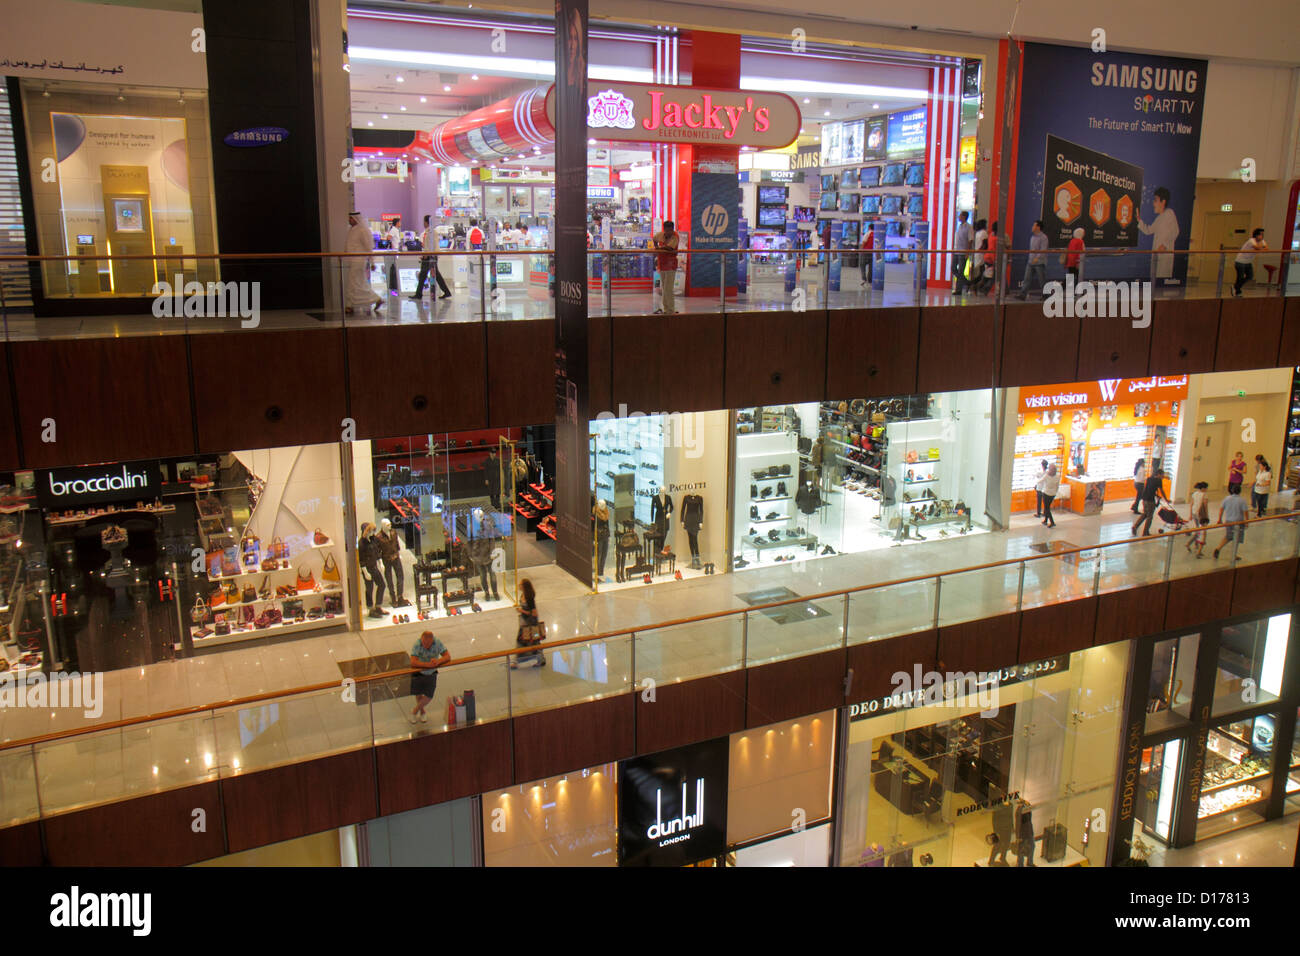 Dubai UAE,United Arab Emirates,Downtown Dubai,Burj Dubai,Dubai mall,store,stores,businesses,district,levels,Jacky's Electronics,Samsung,Braccialini,ha Stock Photo